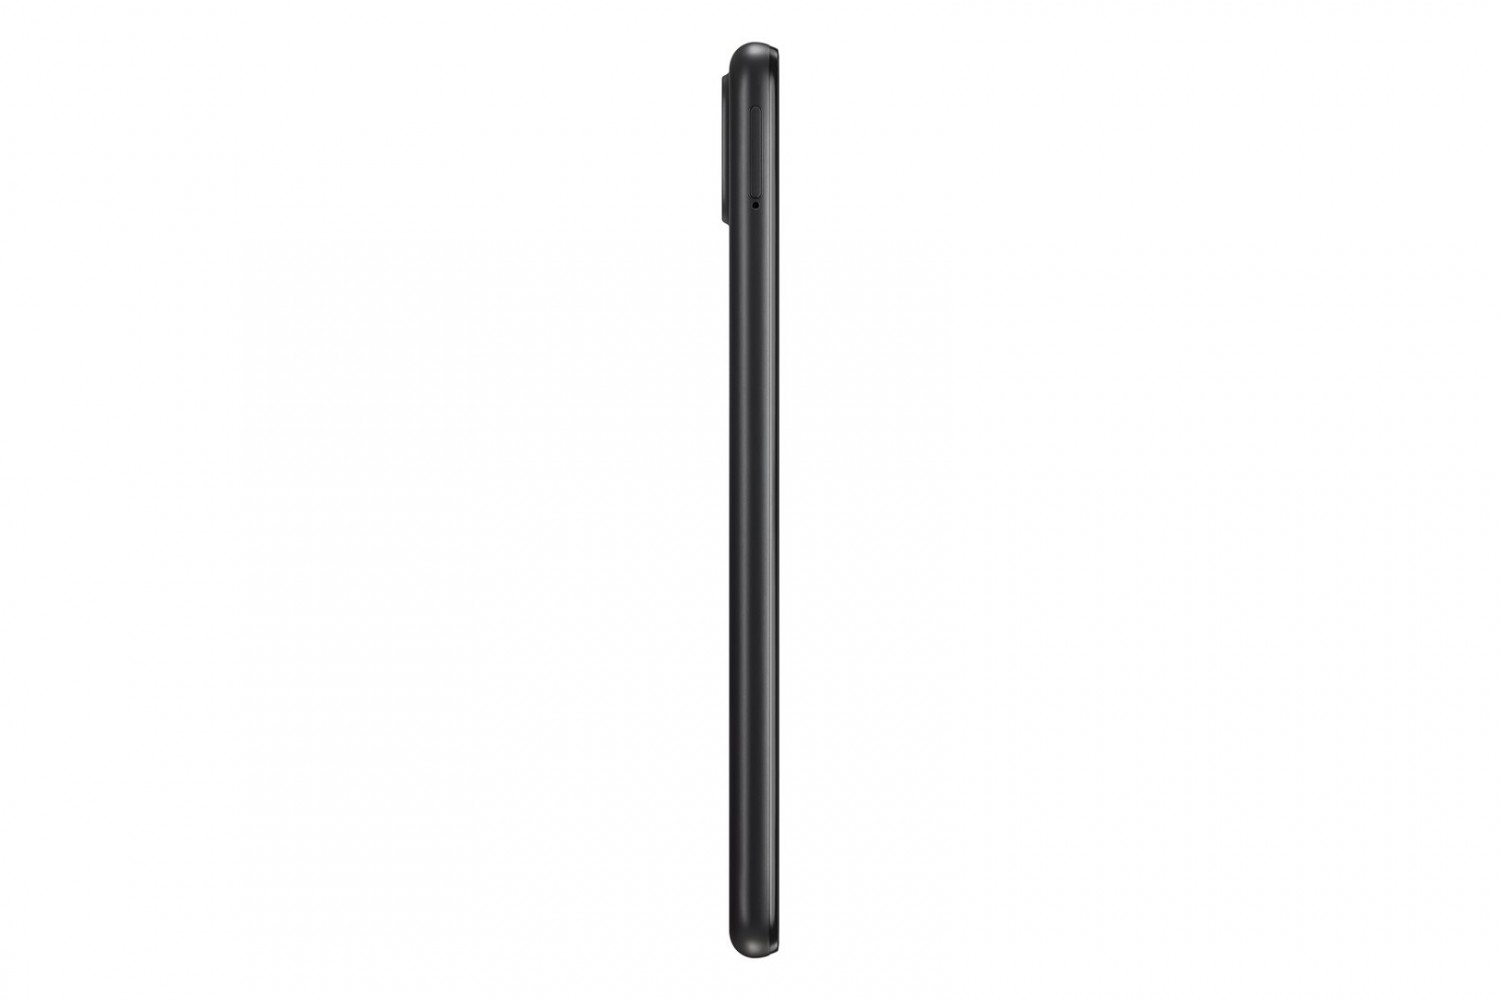 Samsung Galaxy A12 (SM-A125) 4GB/128GB černá